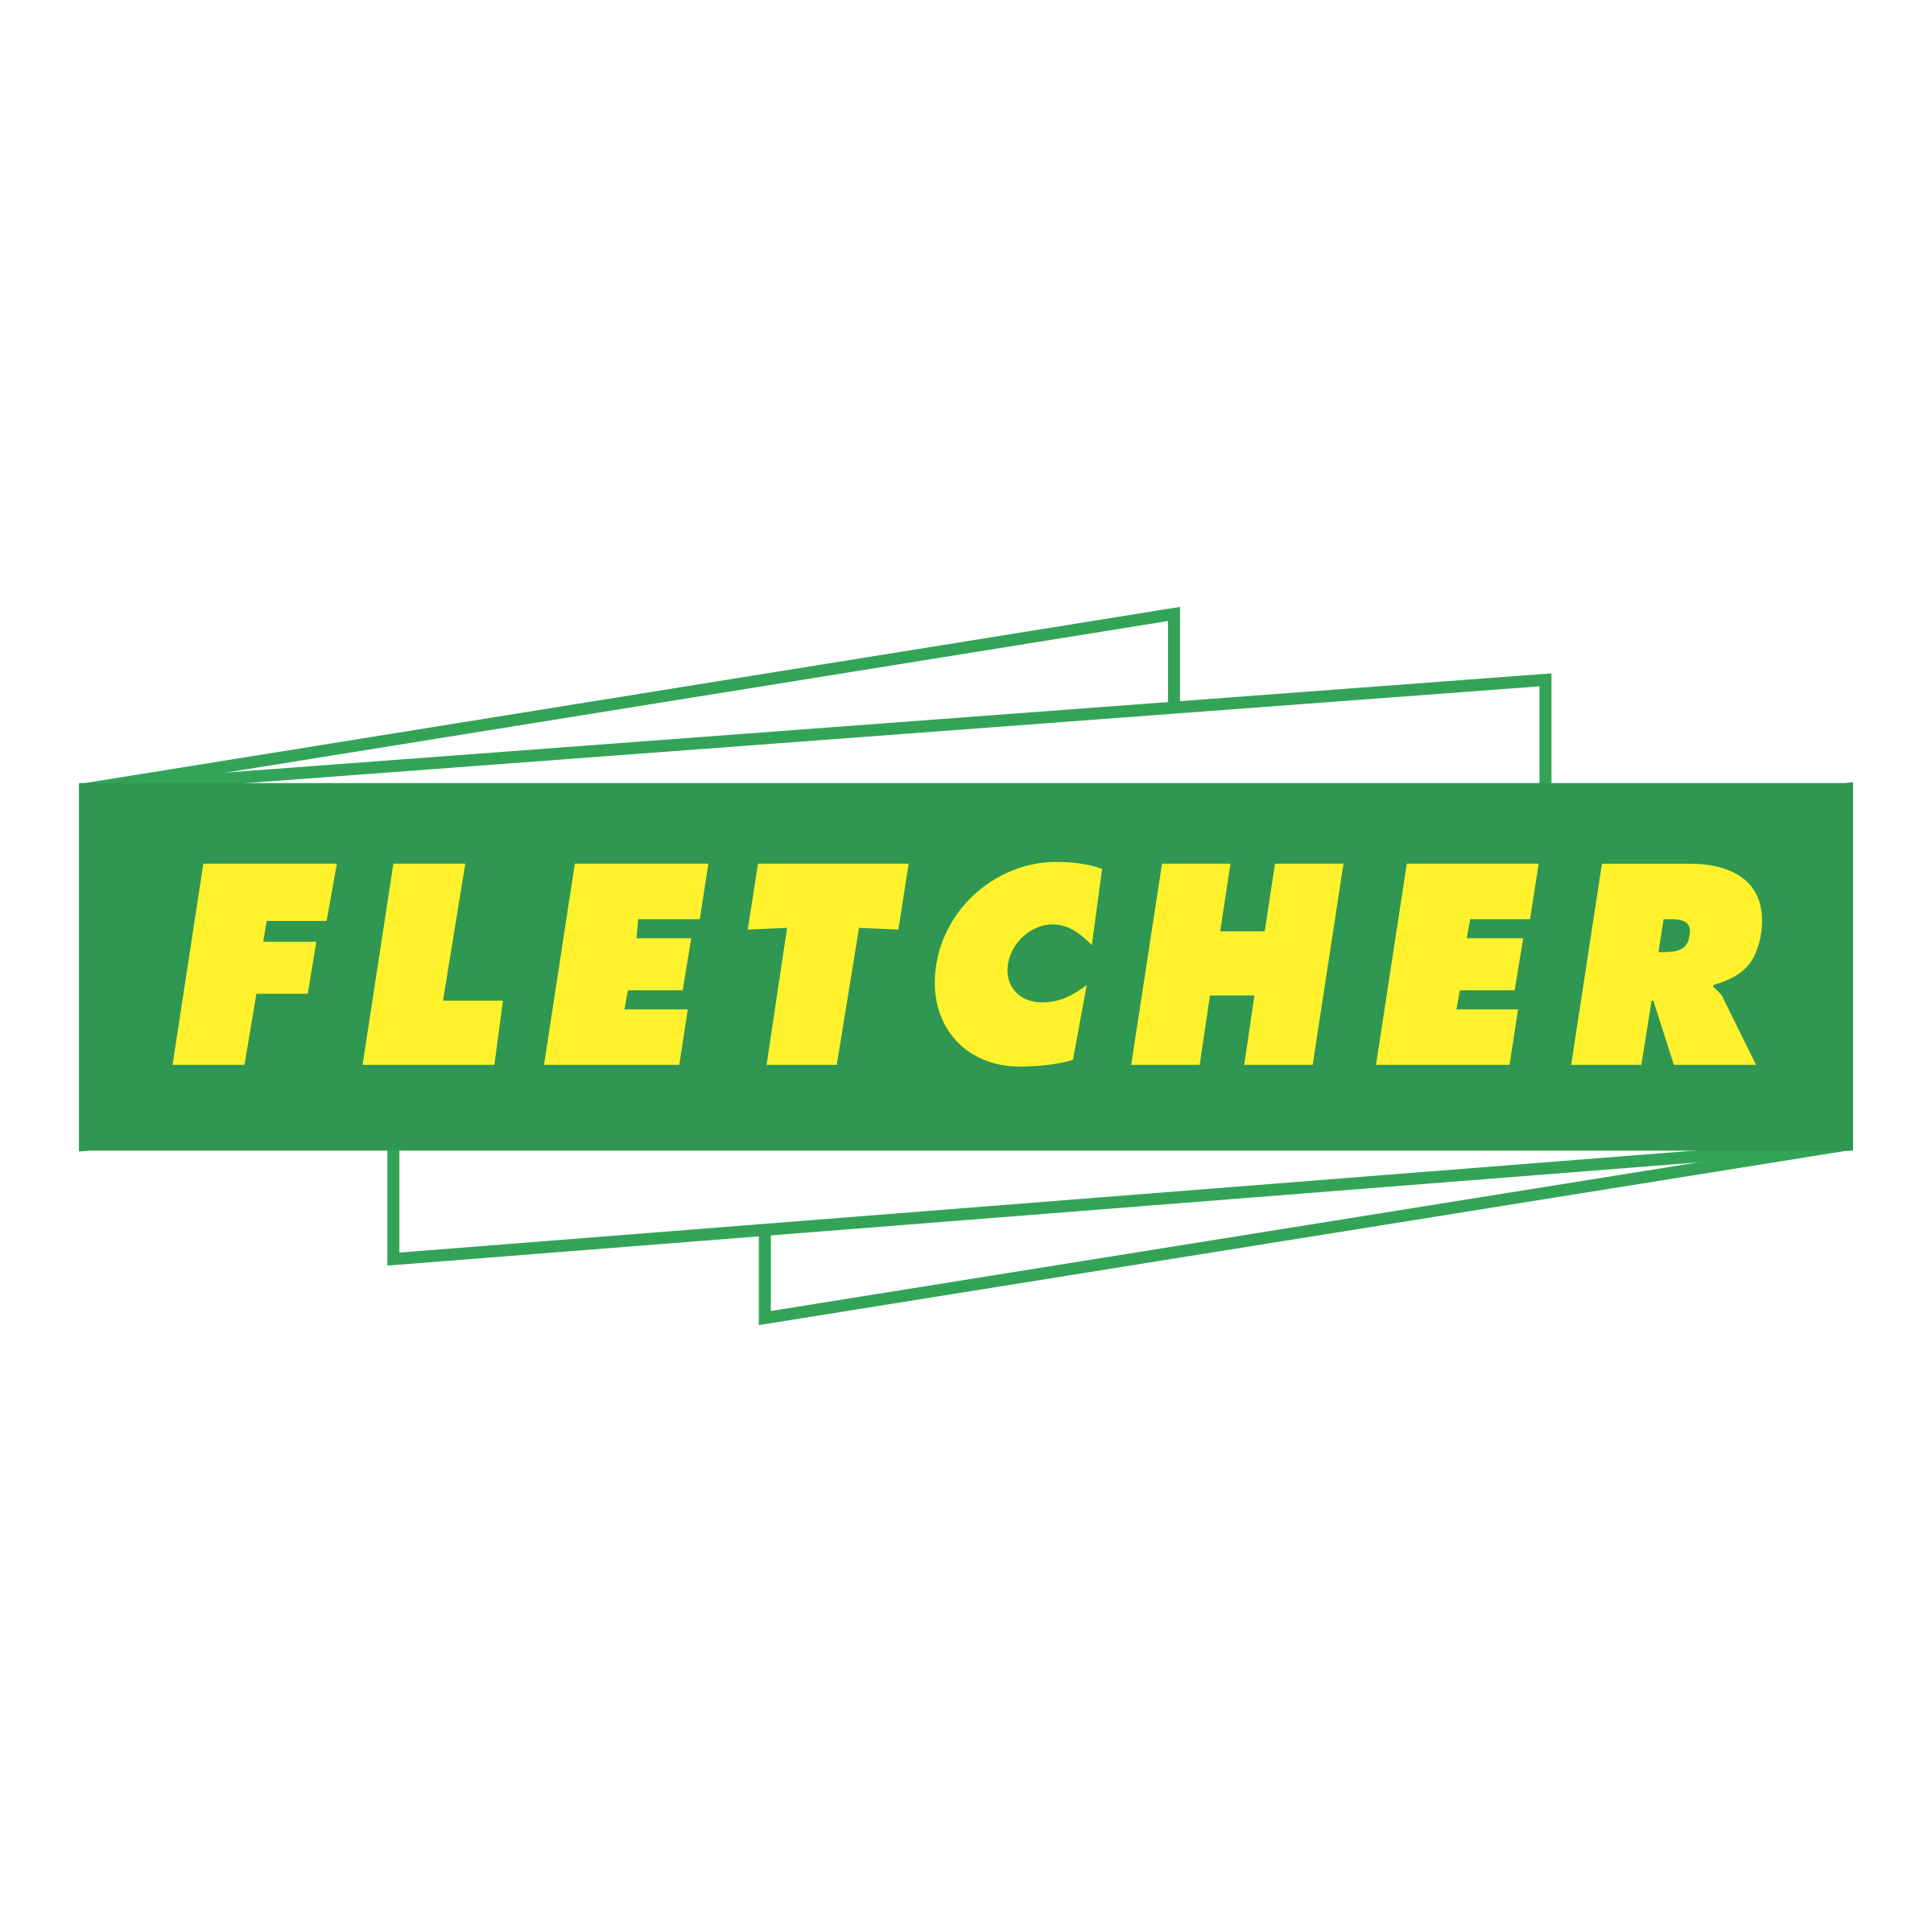 Fletcher Logo - Fletcher Logo PNG Transparent & SVG Vector - Freebie Supply